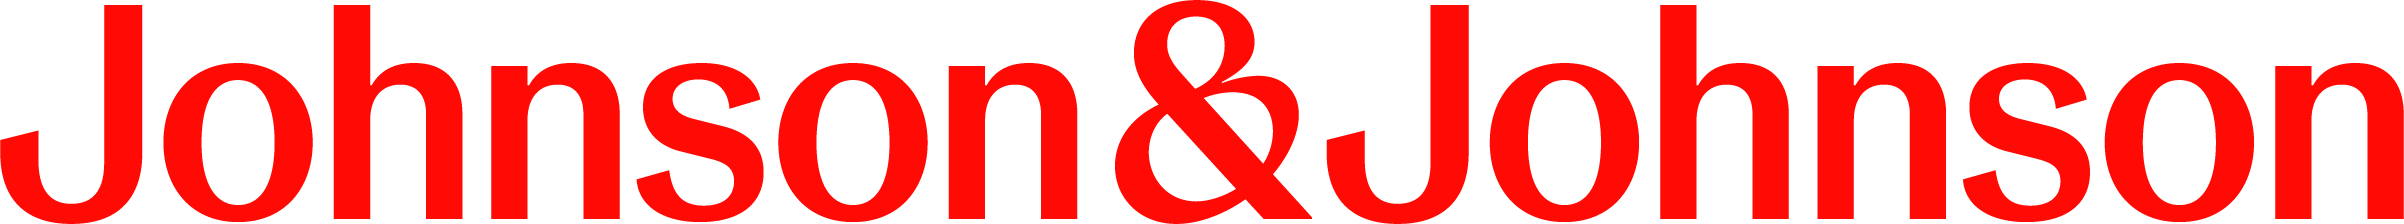 JNJ_Logo_SingleLine_Red_CMYK.jpg